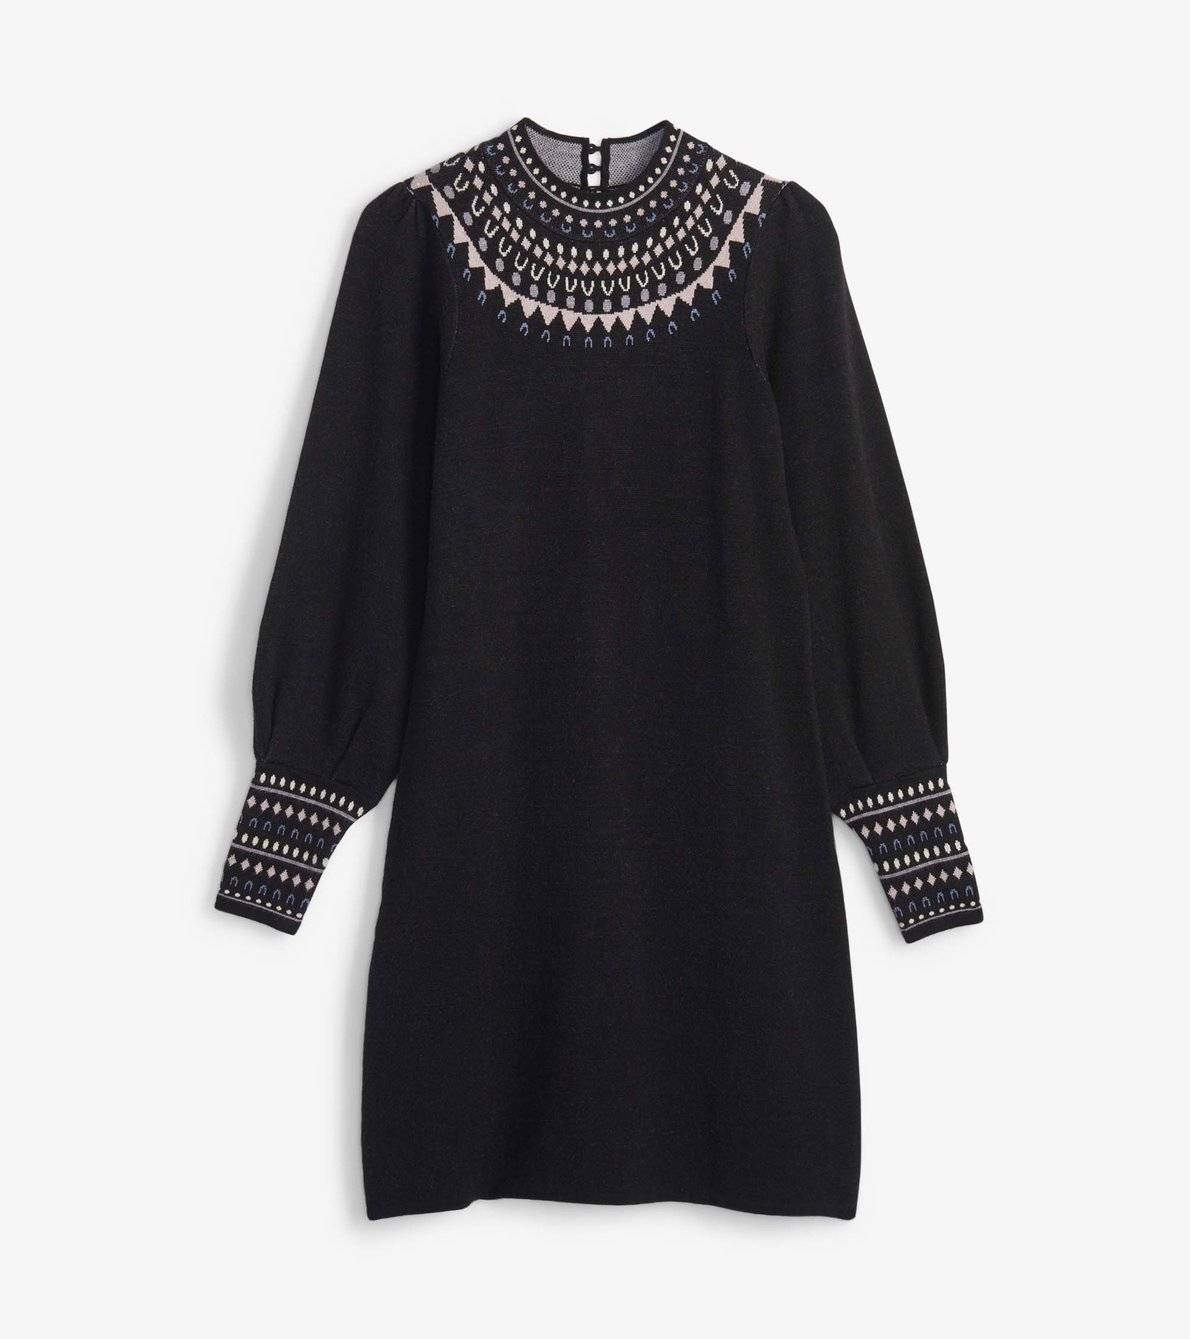 View larger image of Blair Sweater Dress - Black